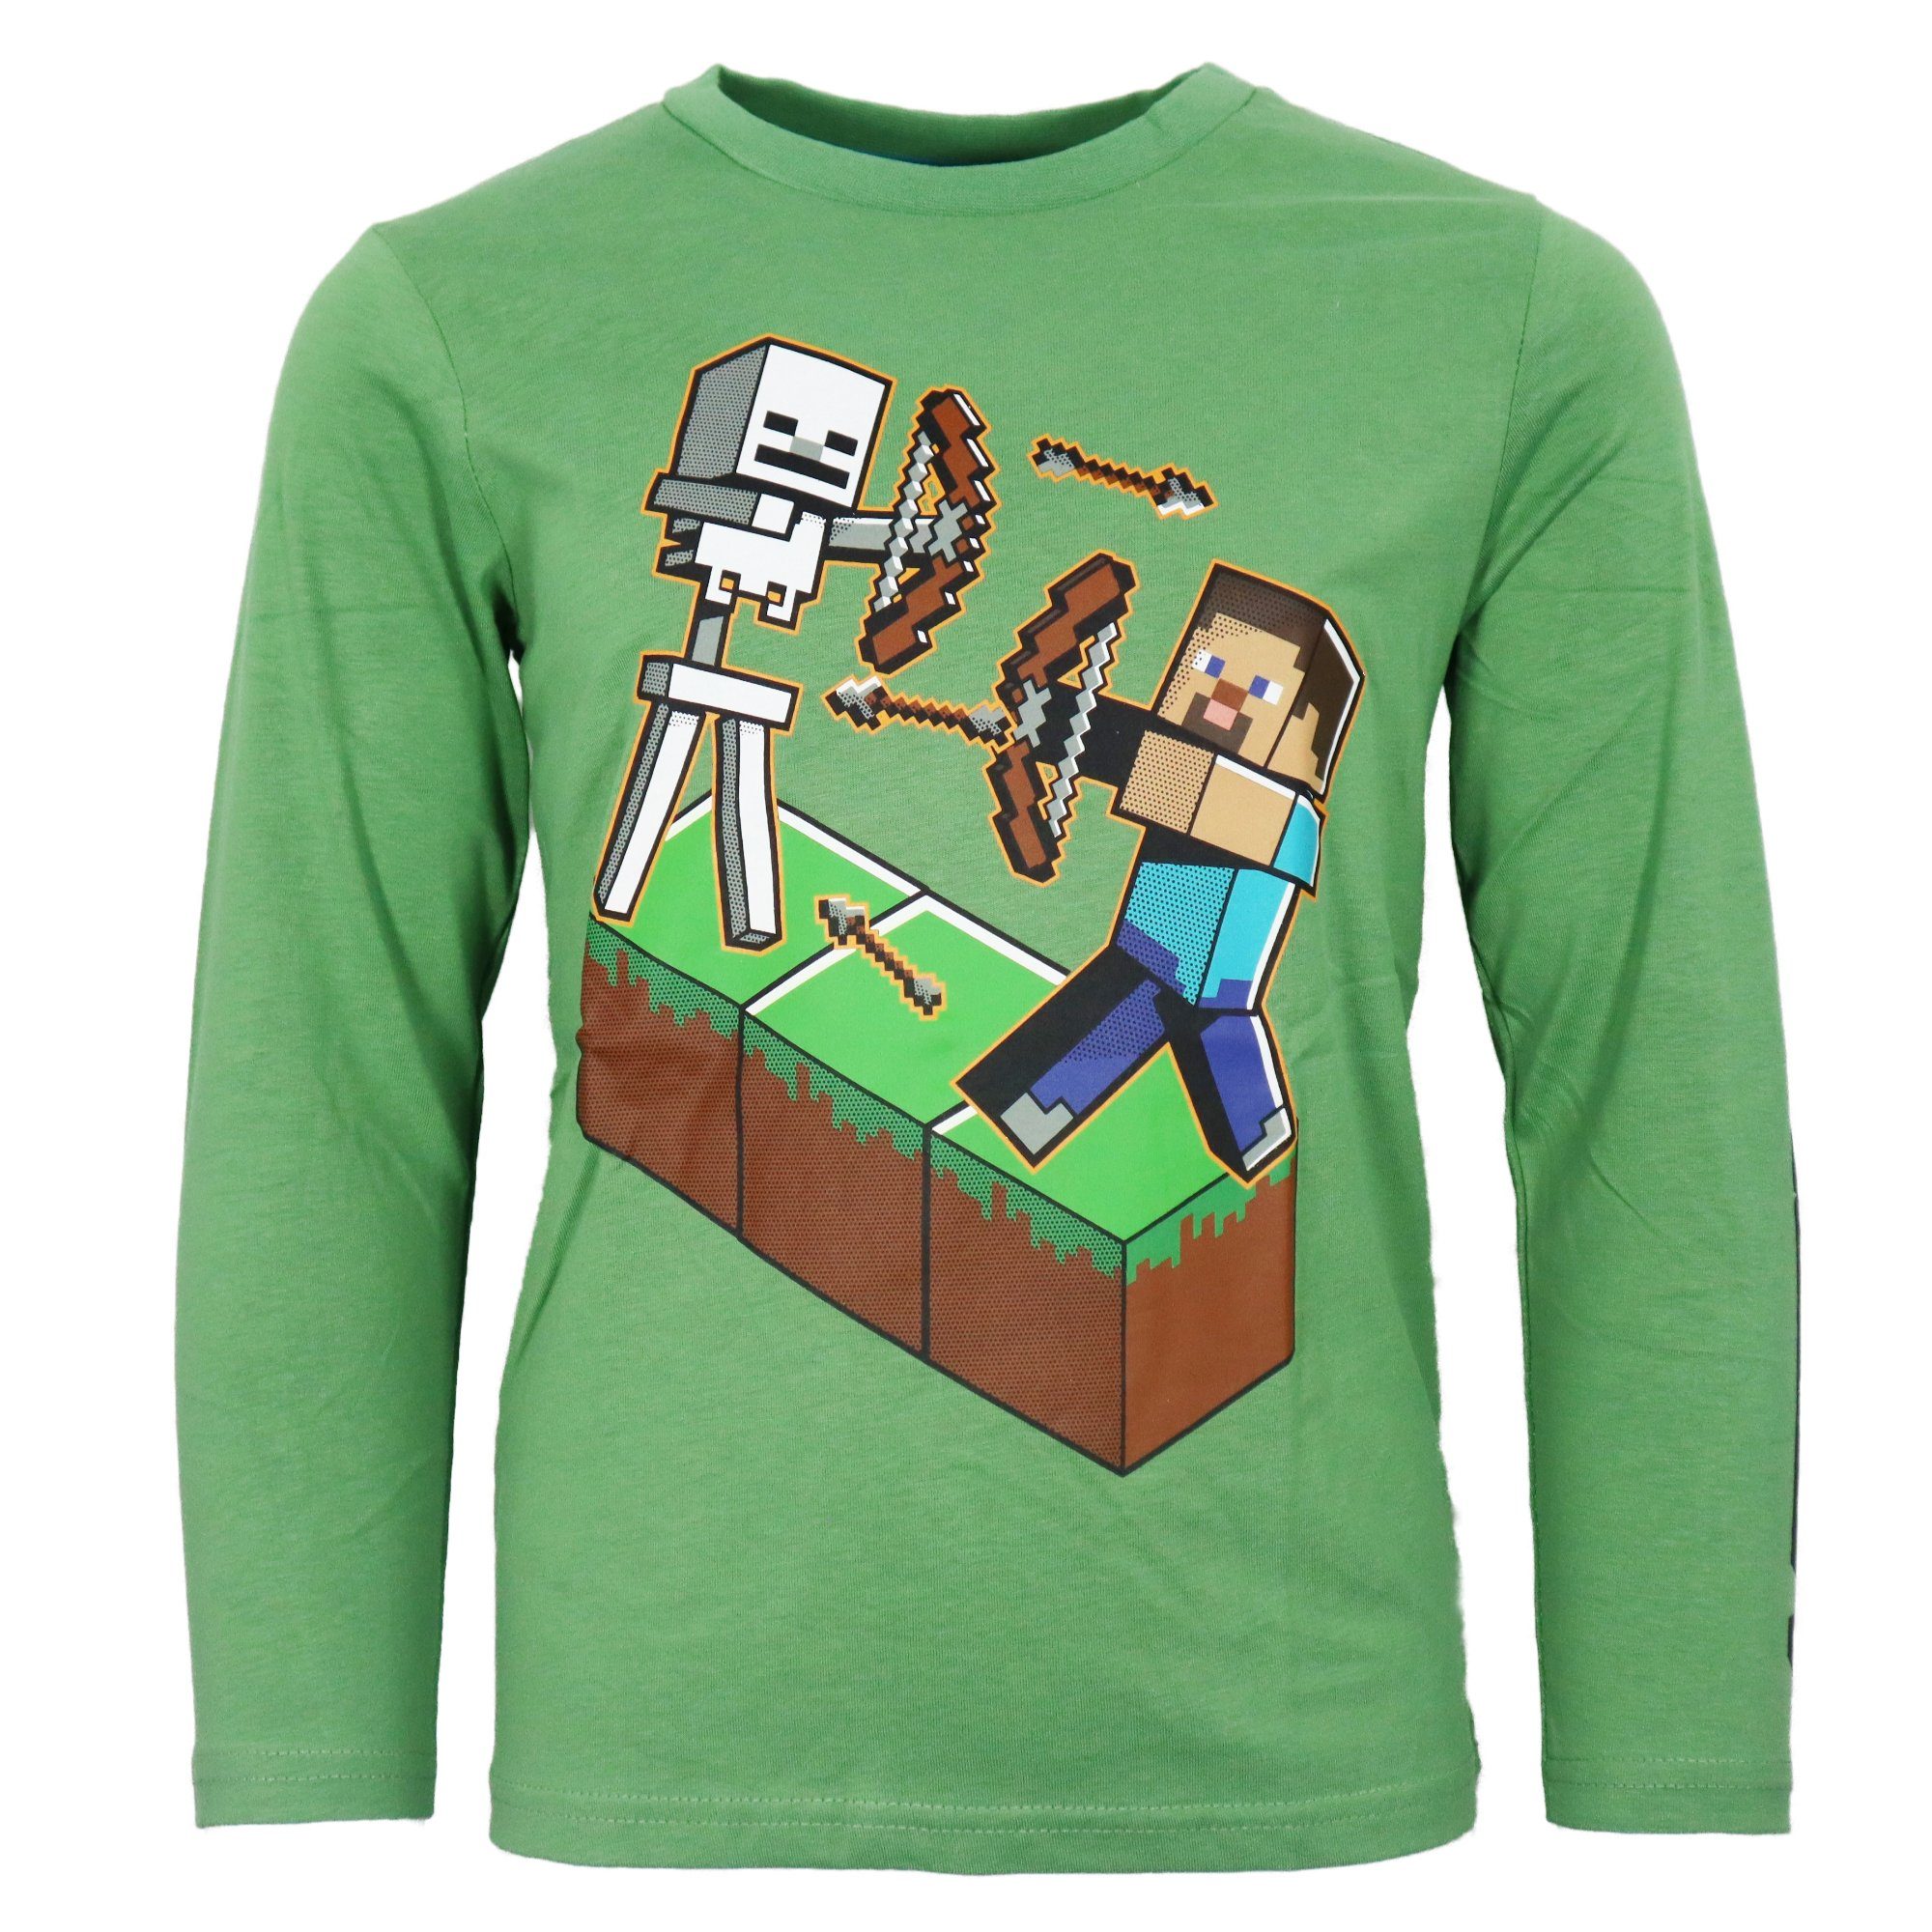 Minecraft Langarmshirt Minecraft Steve Skelett Kinder Jungen Langar Shirt Gr. 116 bis 152, 100% Baumwolle